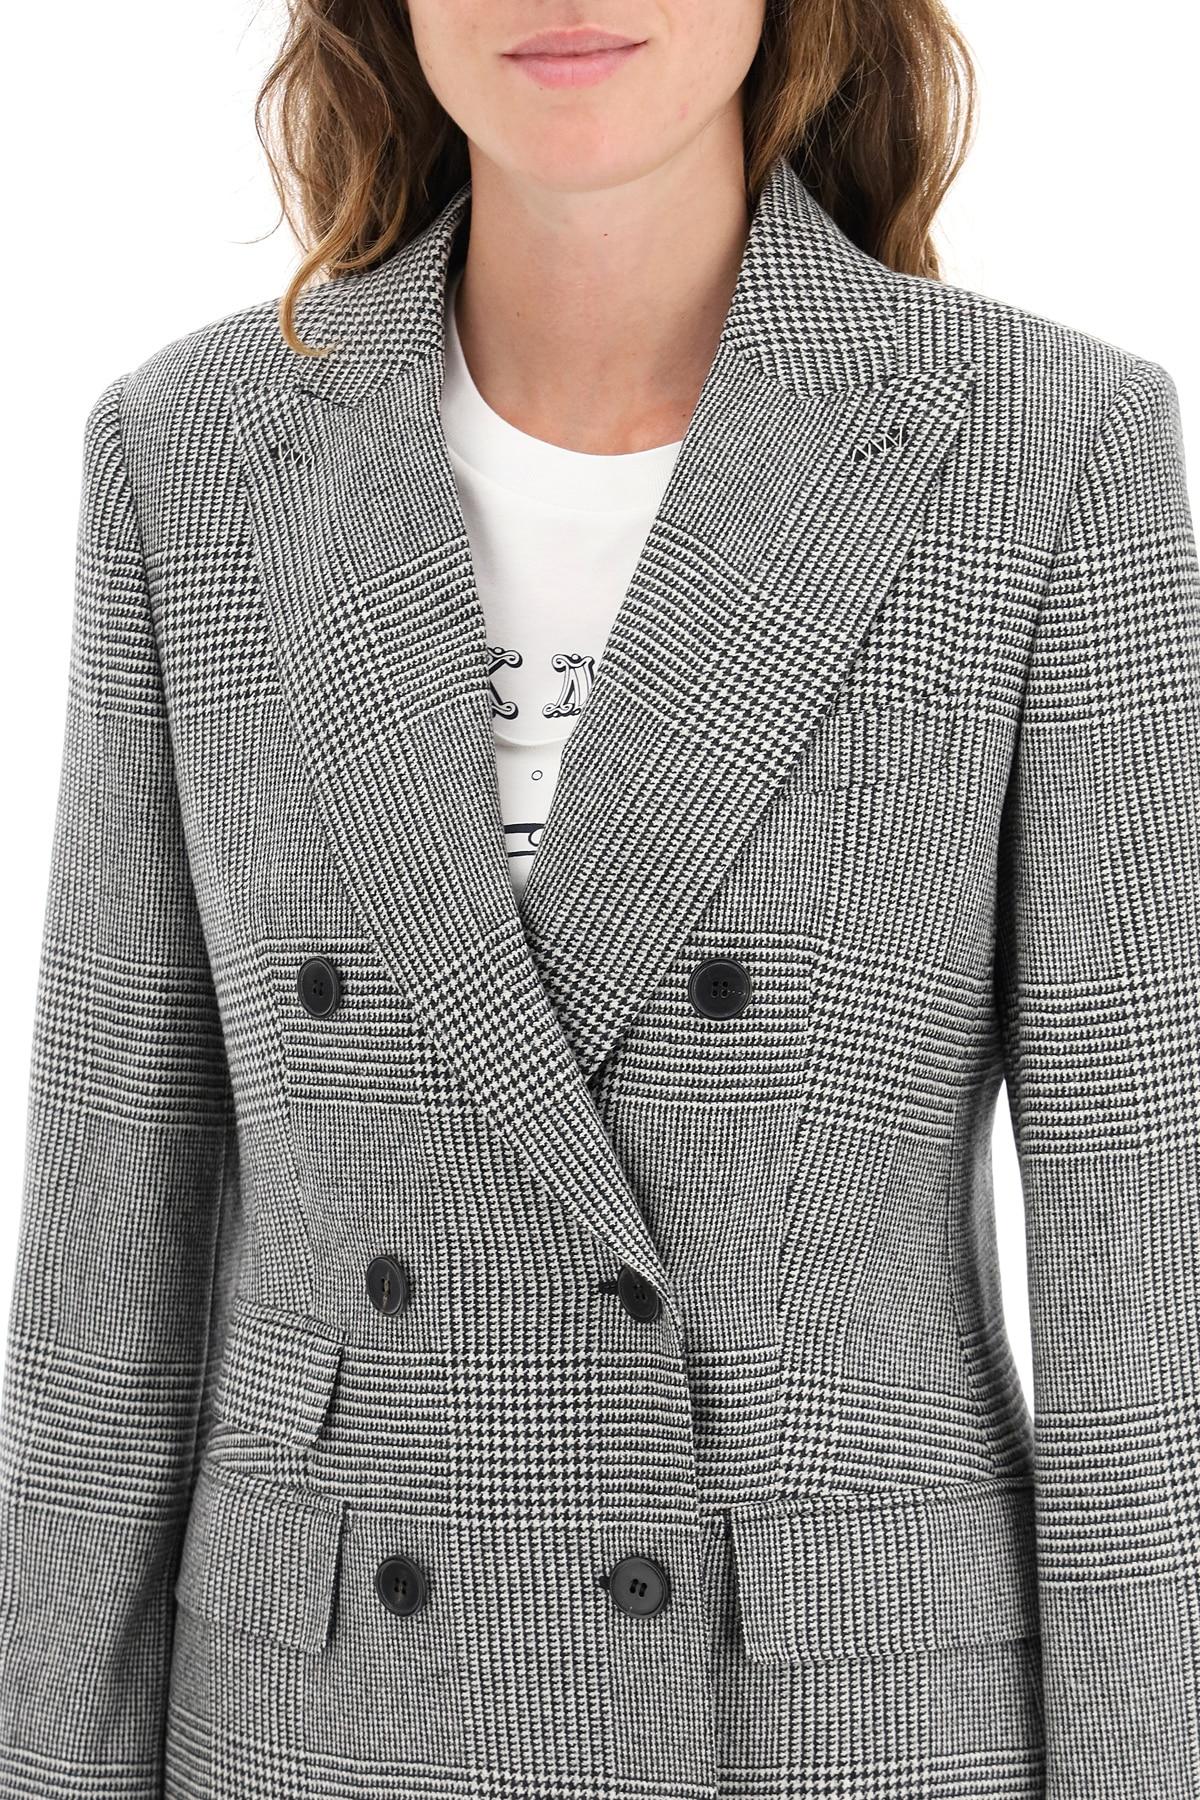 Max Mara Wool Arabba Tartan Jacket in White/Metallic (Gray) - Save 